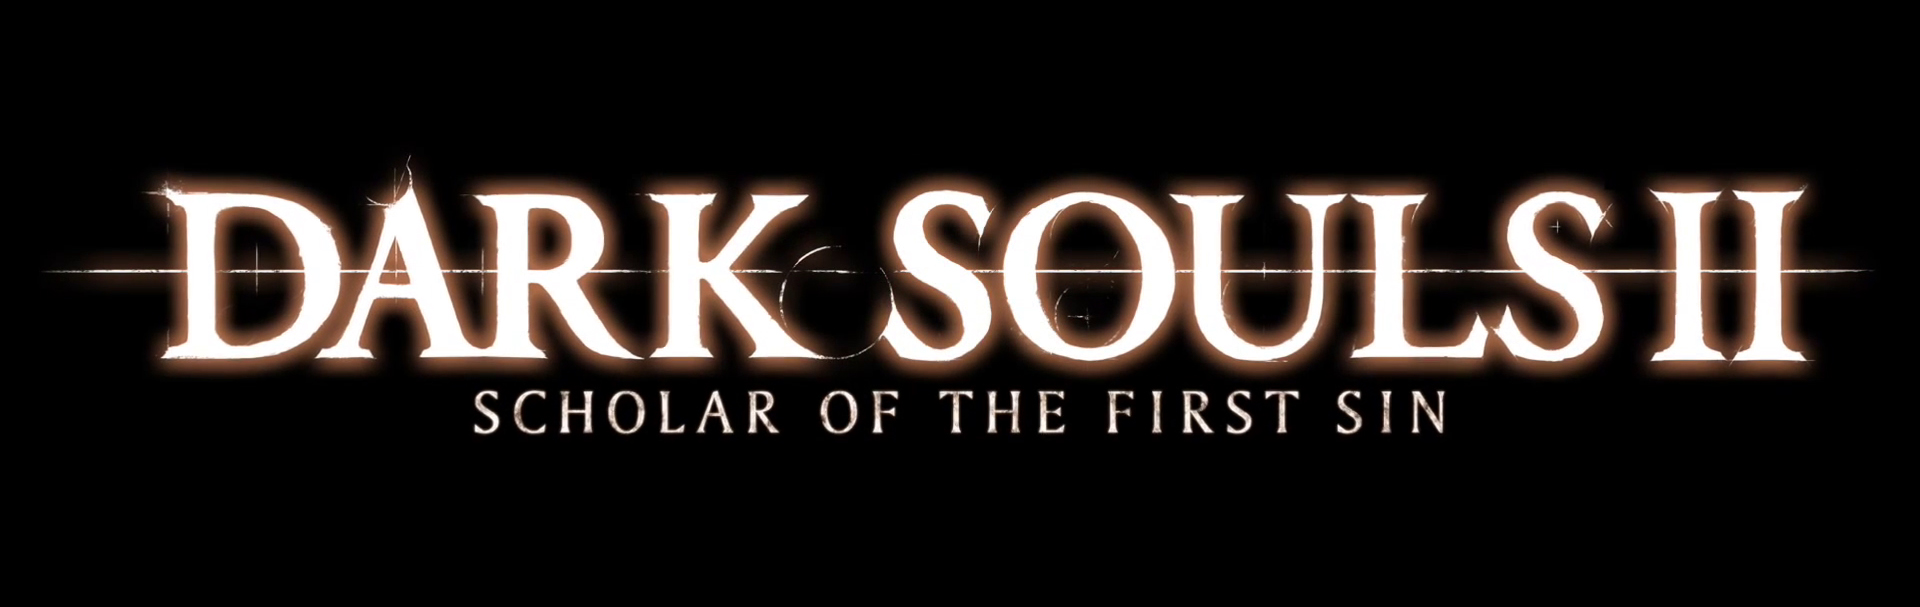 Dark Souls II ? Scholar of the First Sin sur PlayStation 4 et Xbox